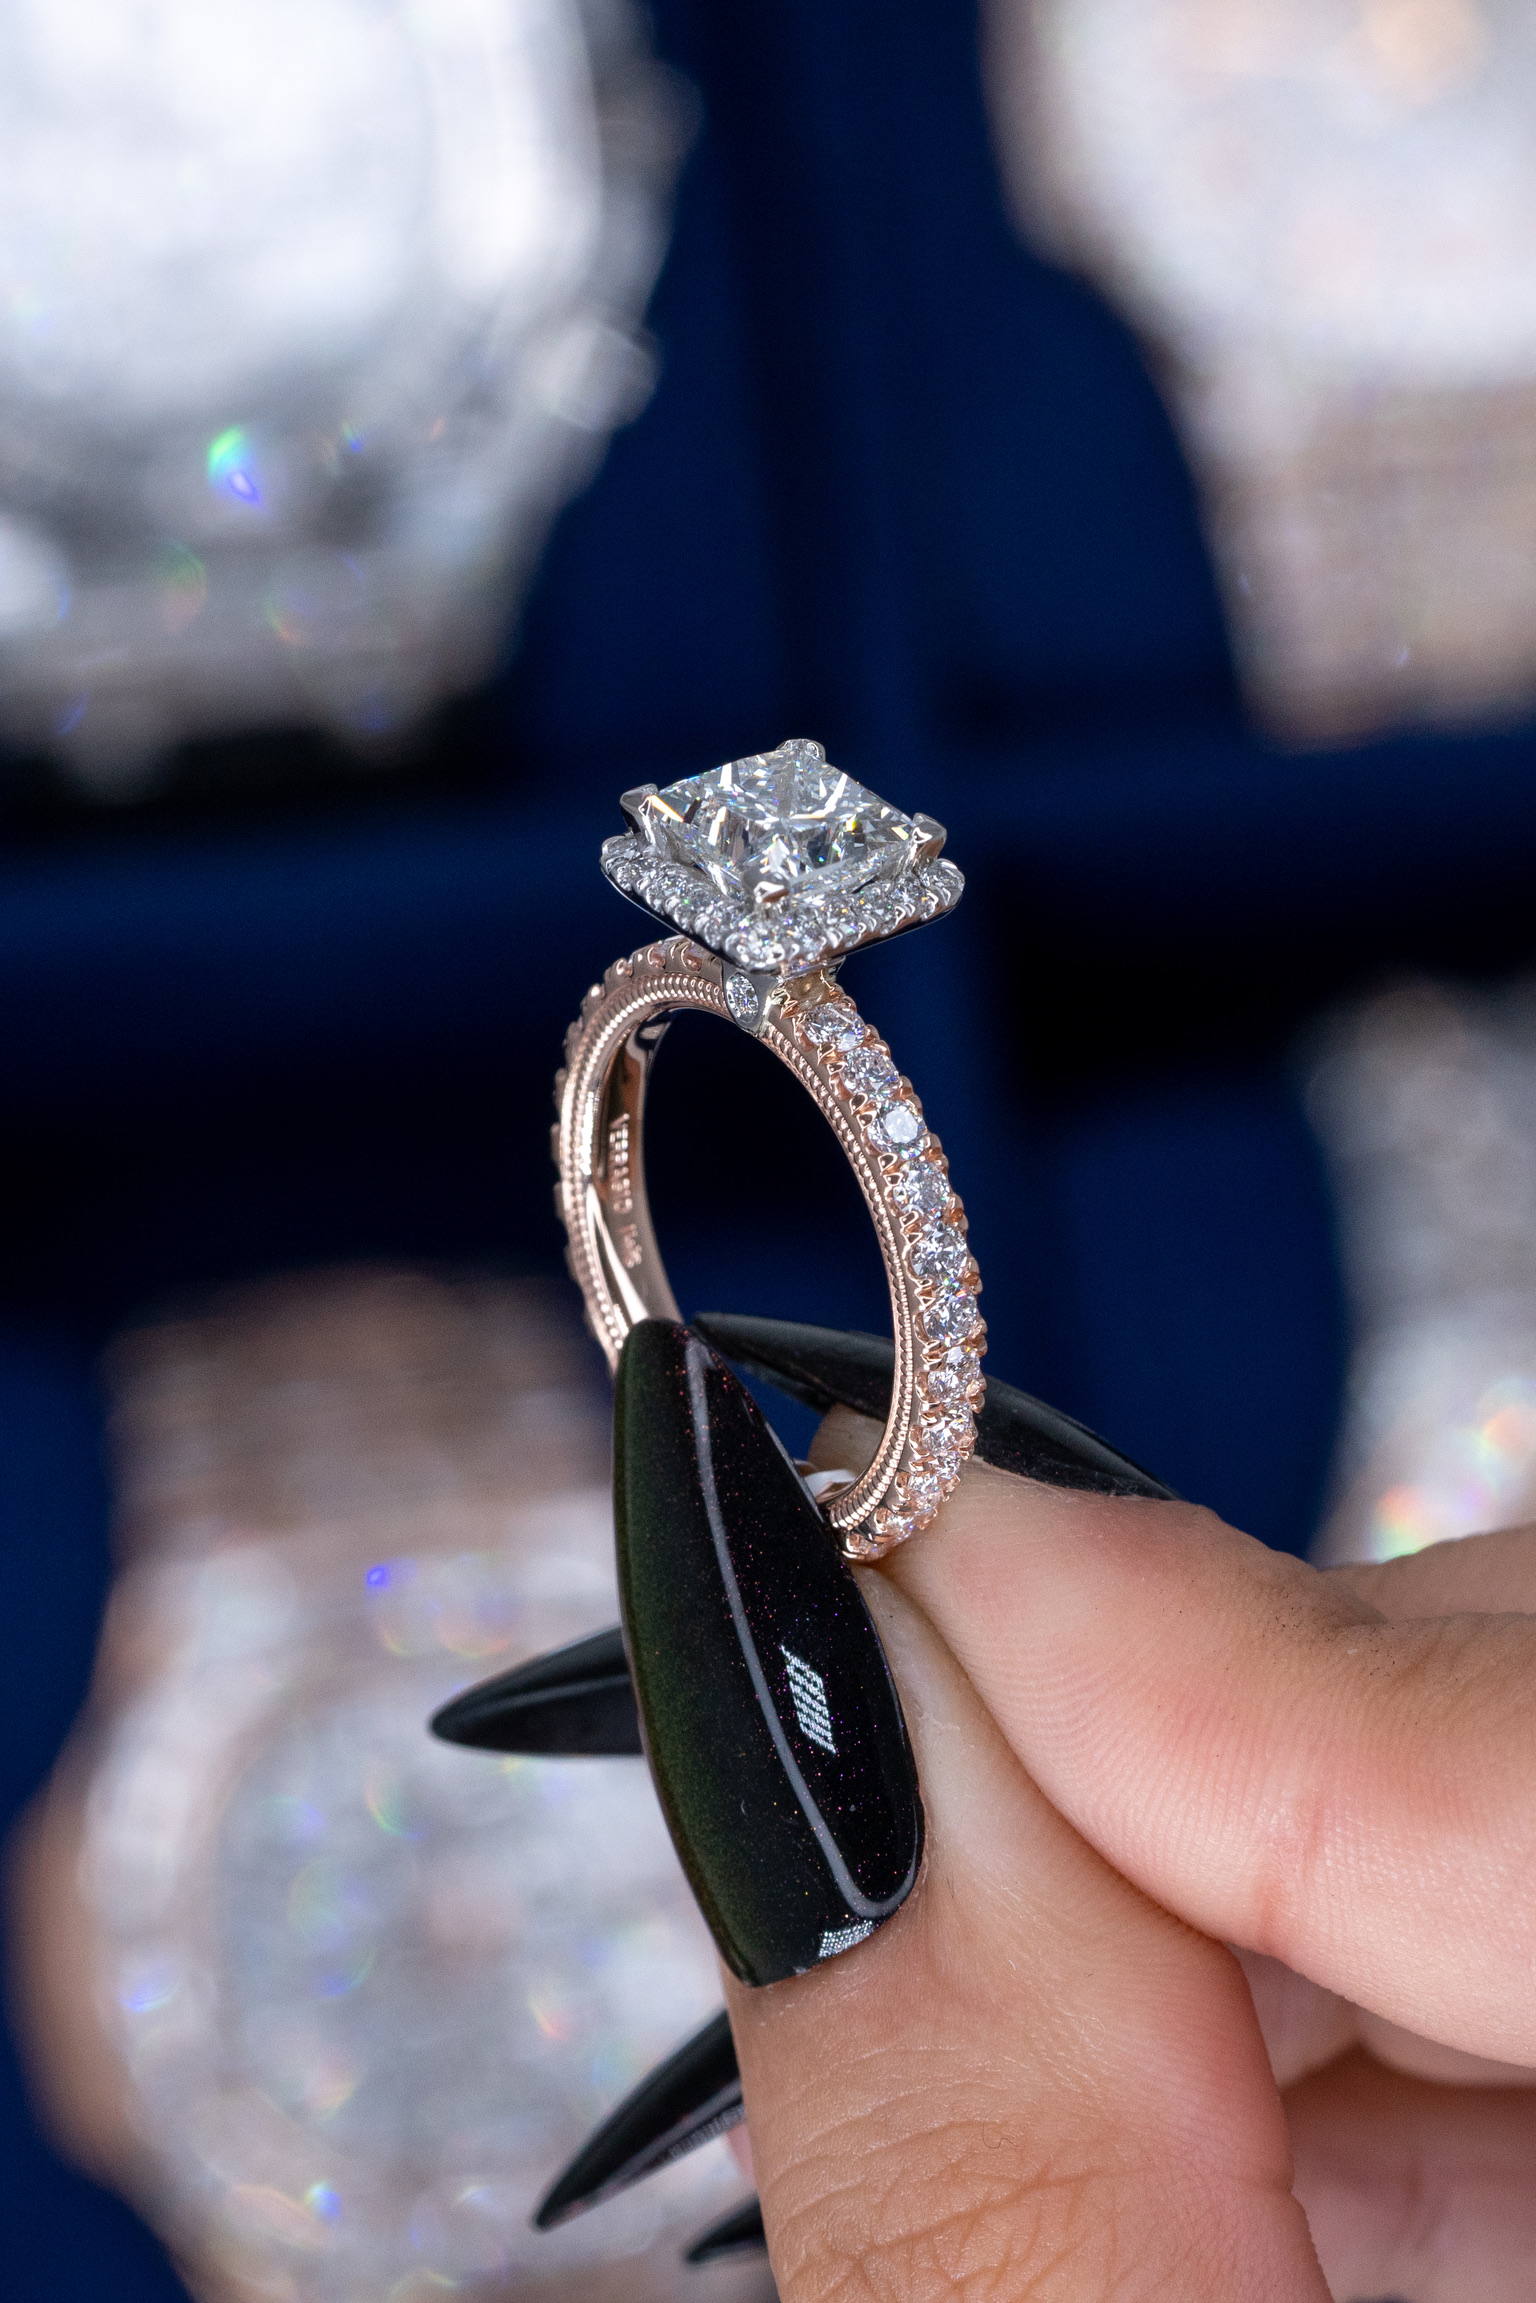 LV Diamonds Pavé V Ring, Platinum - Jewelry - Categories